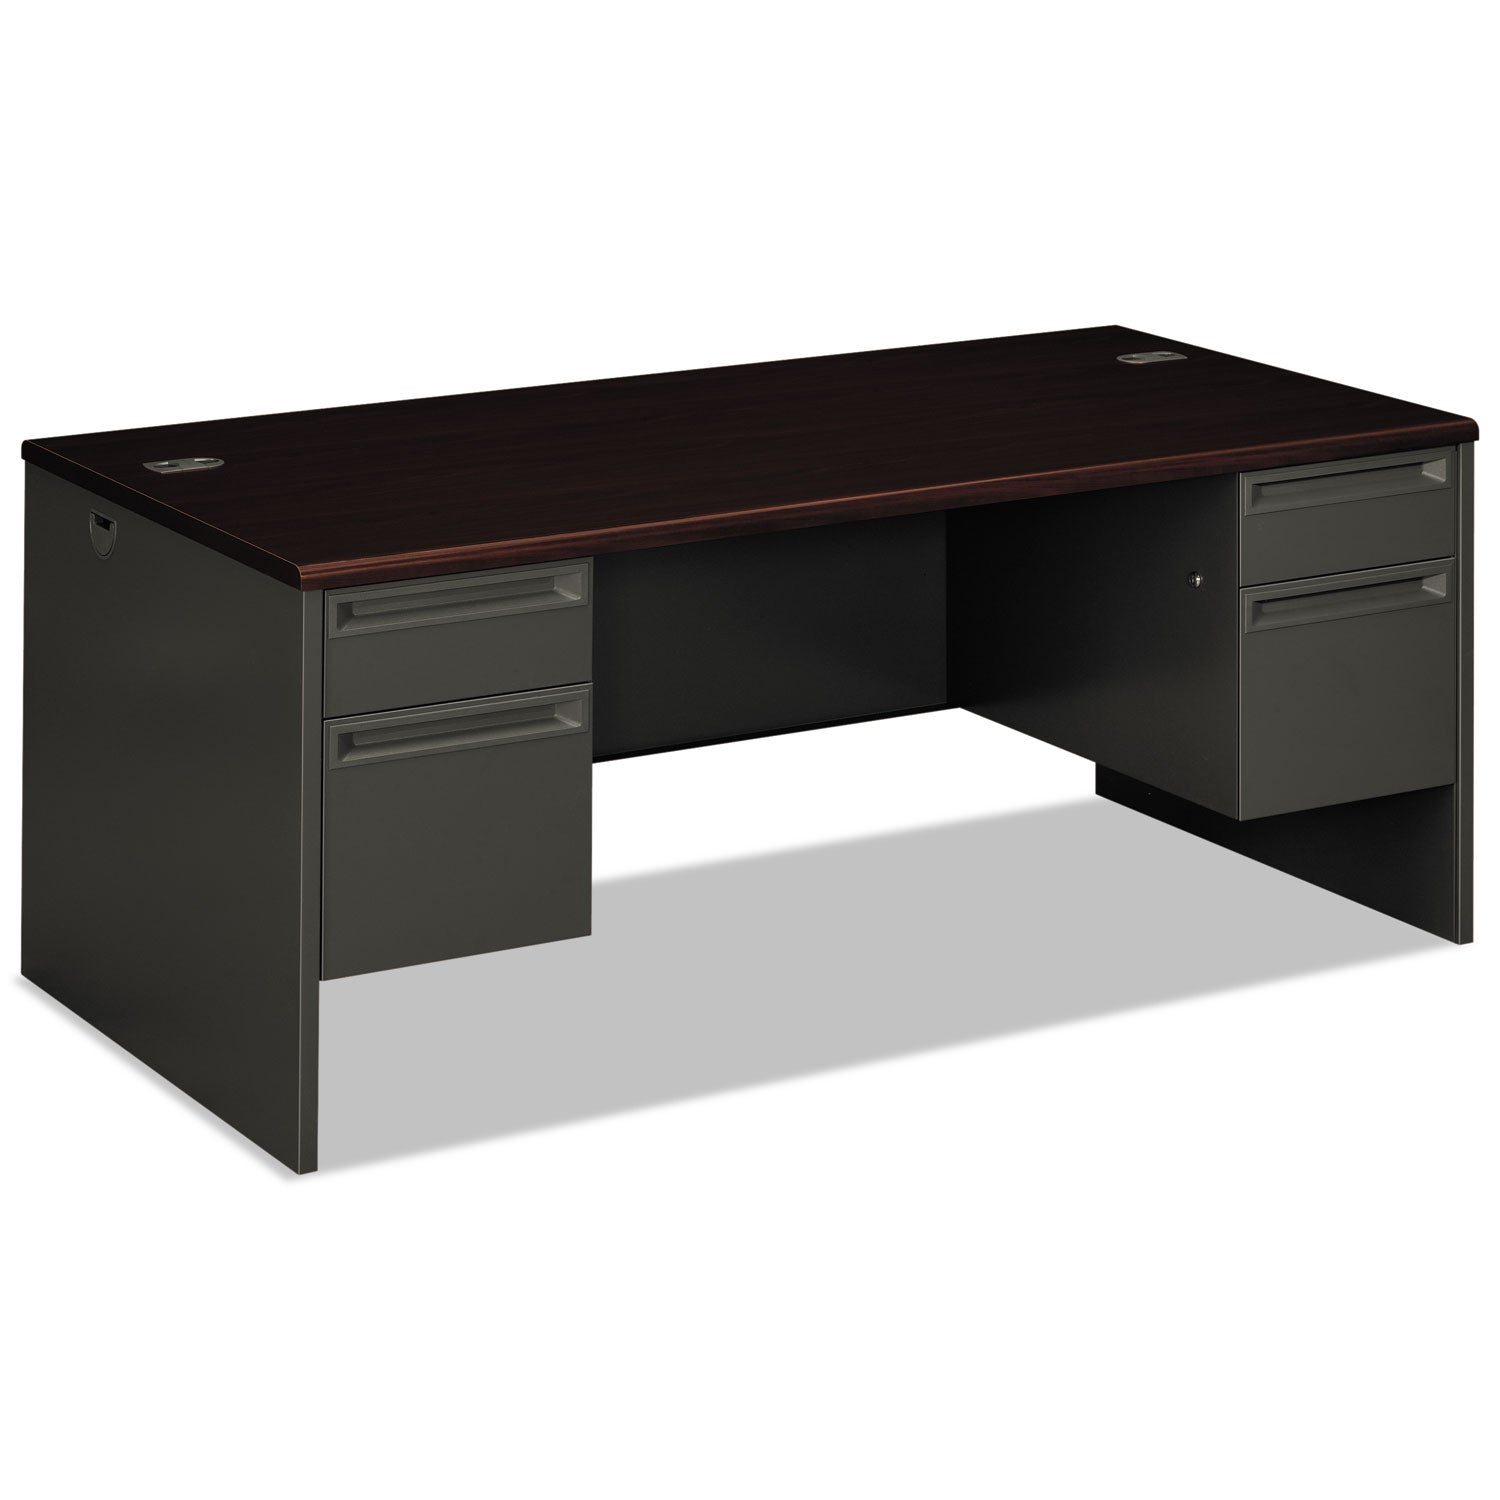 38000 Series Double Pedestal Desk, 72" x 36" x 29.5", Mahogany/Charcoal - 